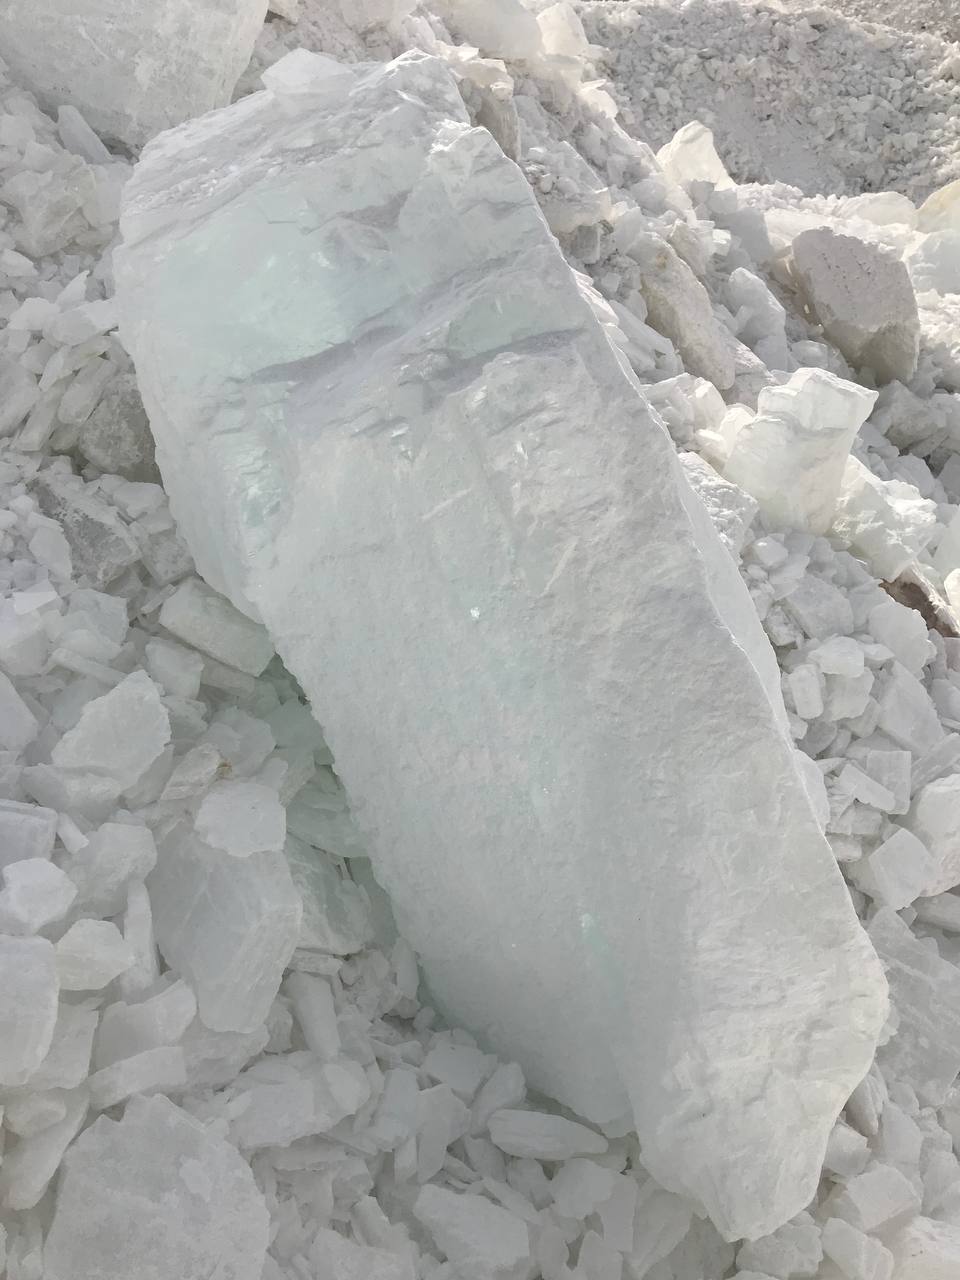 An untouched big piece of pure gypsum